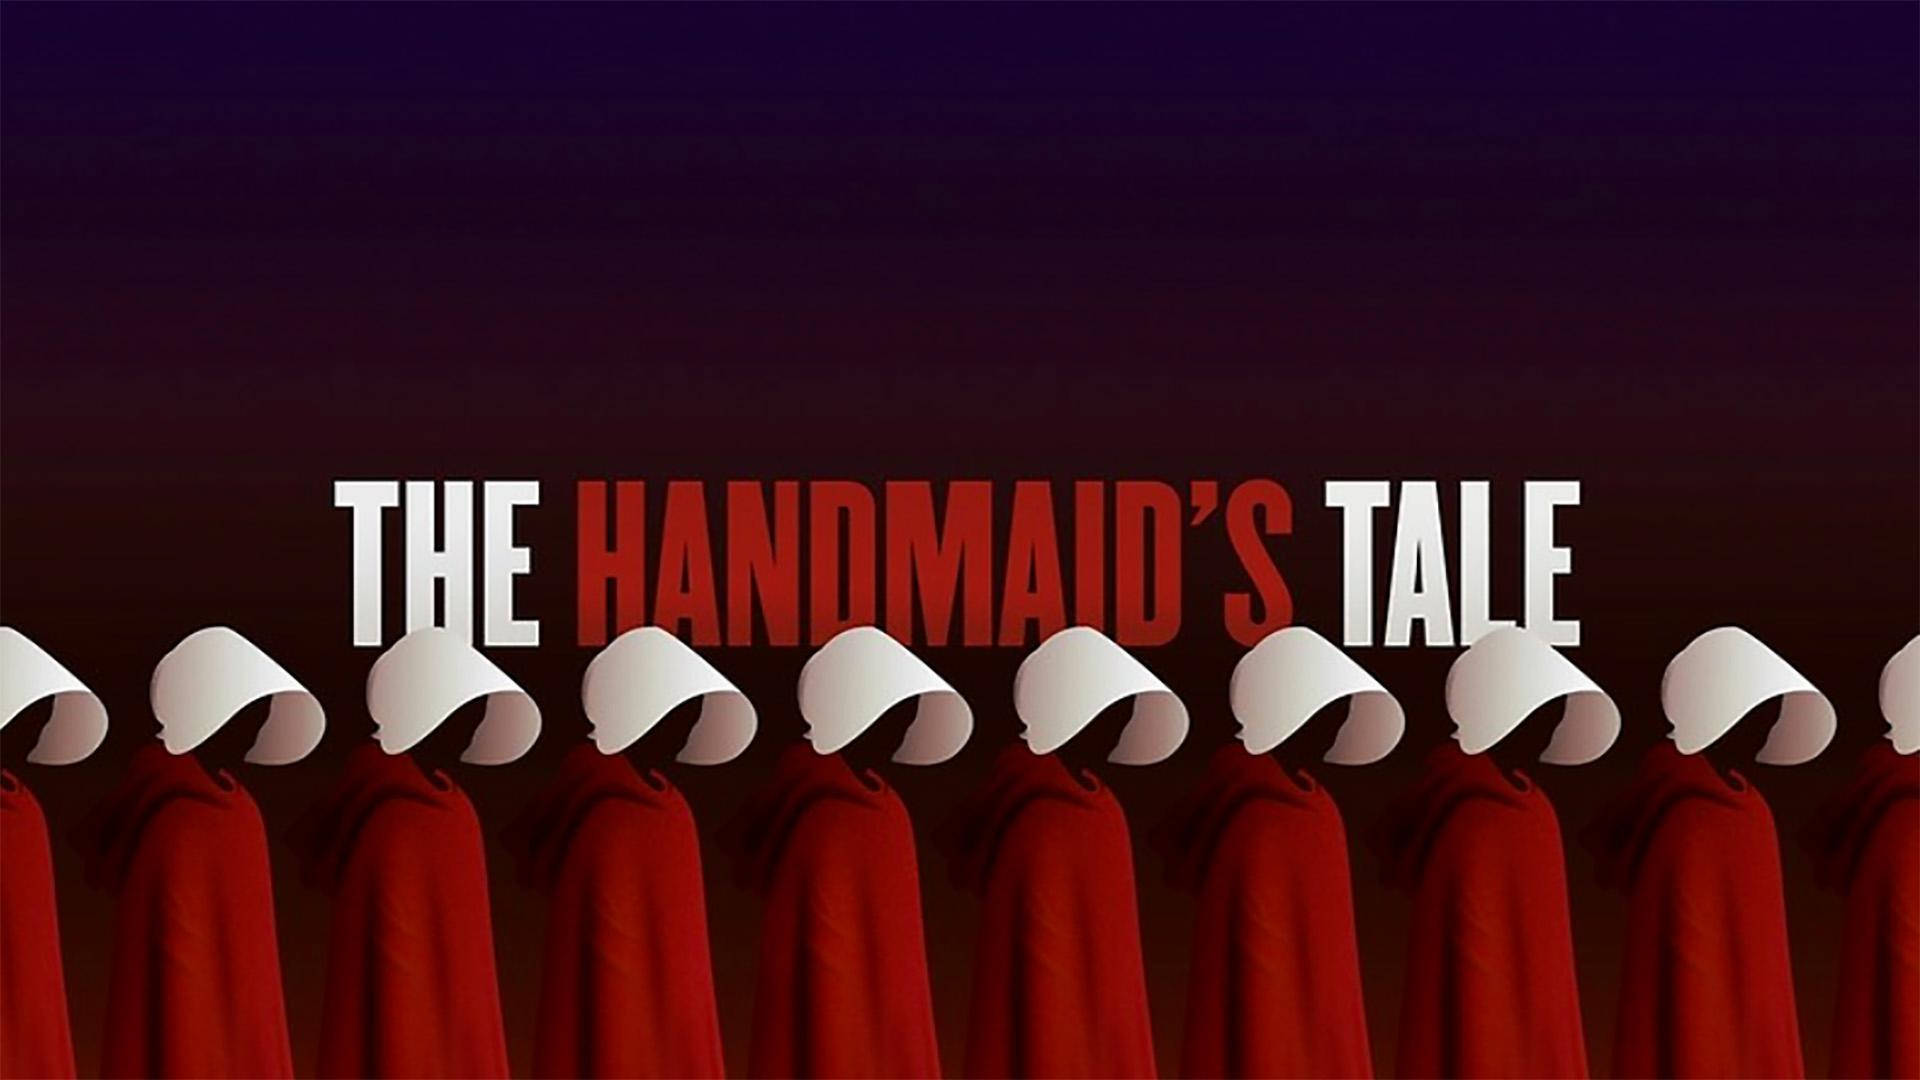 The Handmaid's Tale American Tv Dystopian Series Wallpaper